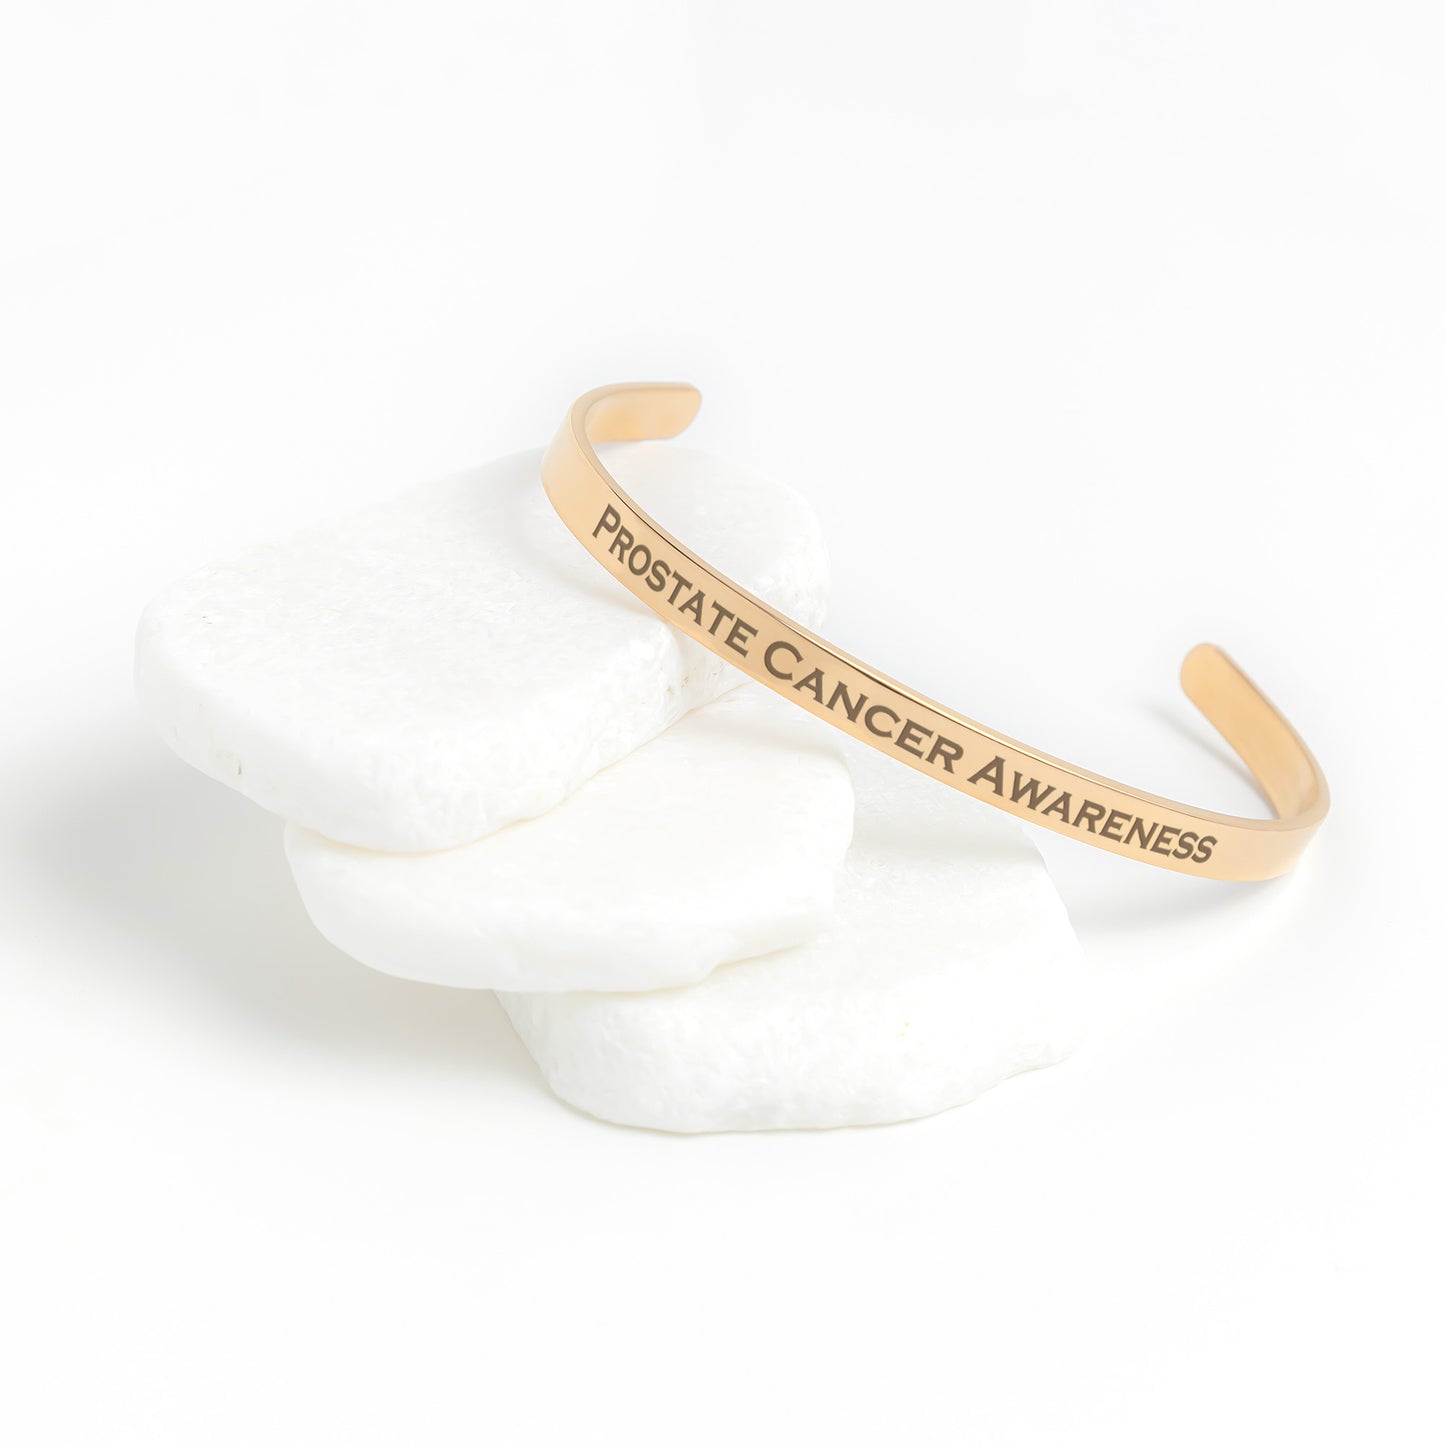 Personalized Prostate Cancer Awareness Cuff Bracelet